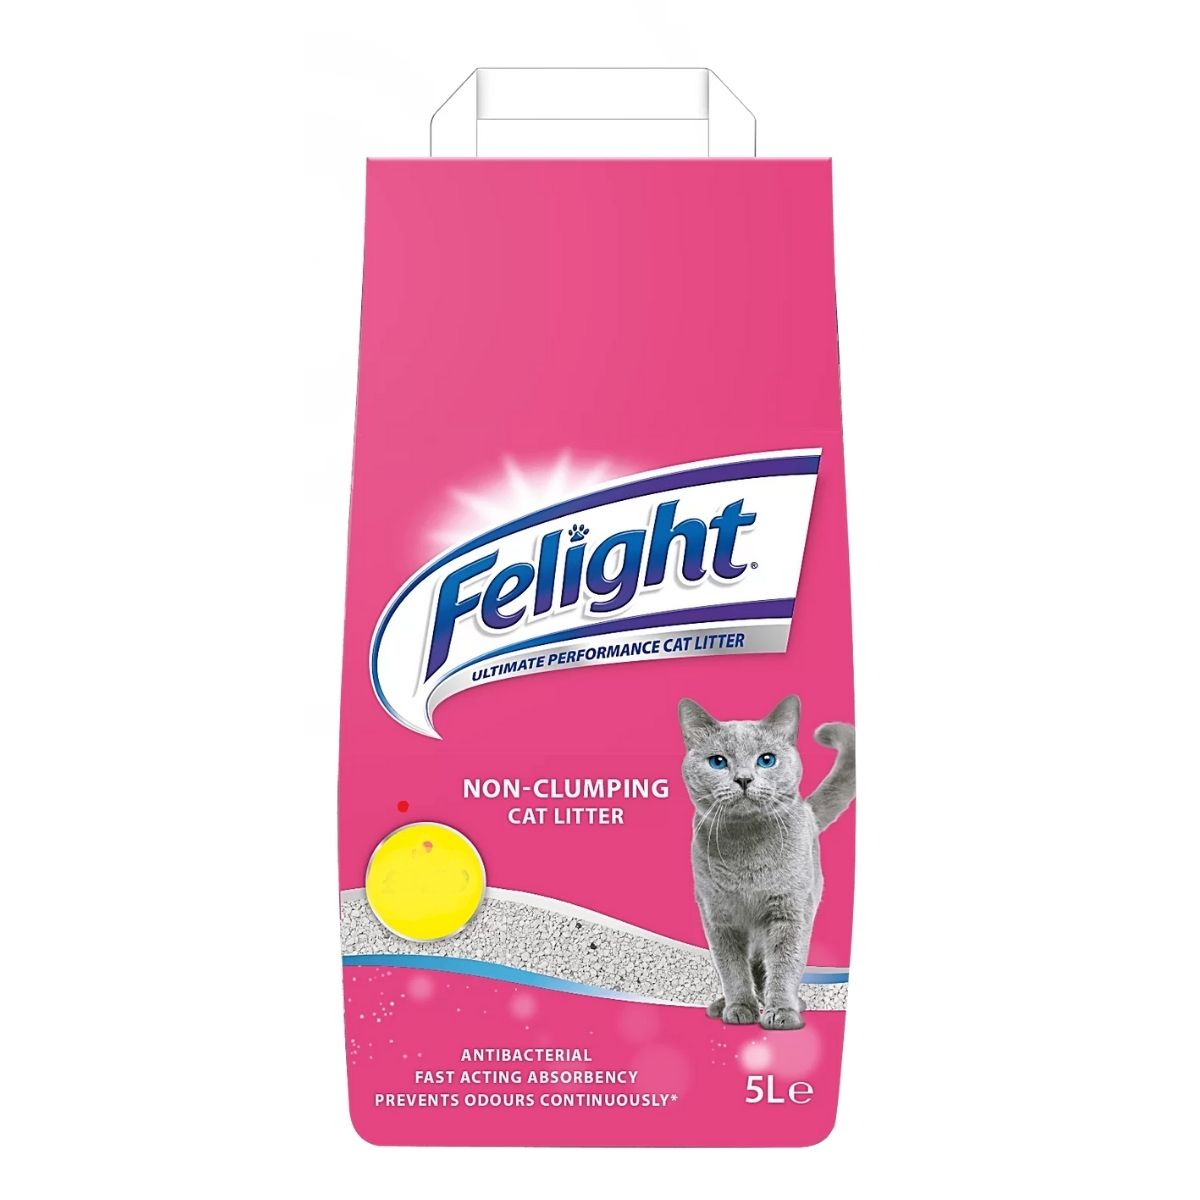 Felight - Antibacterial Non-Clumping Cat Litter - 5L bag.